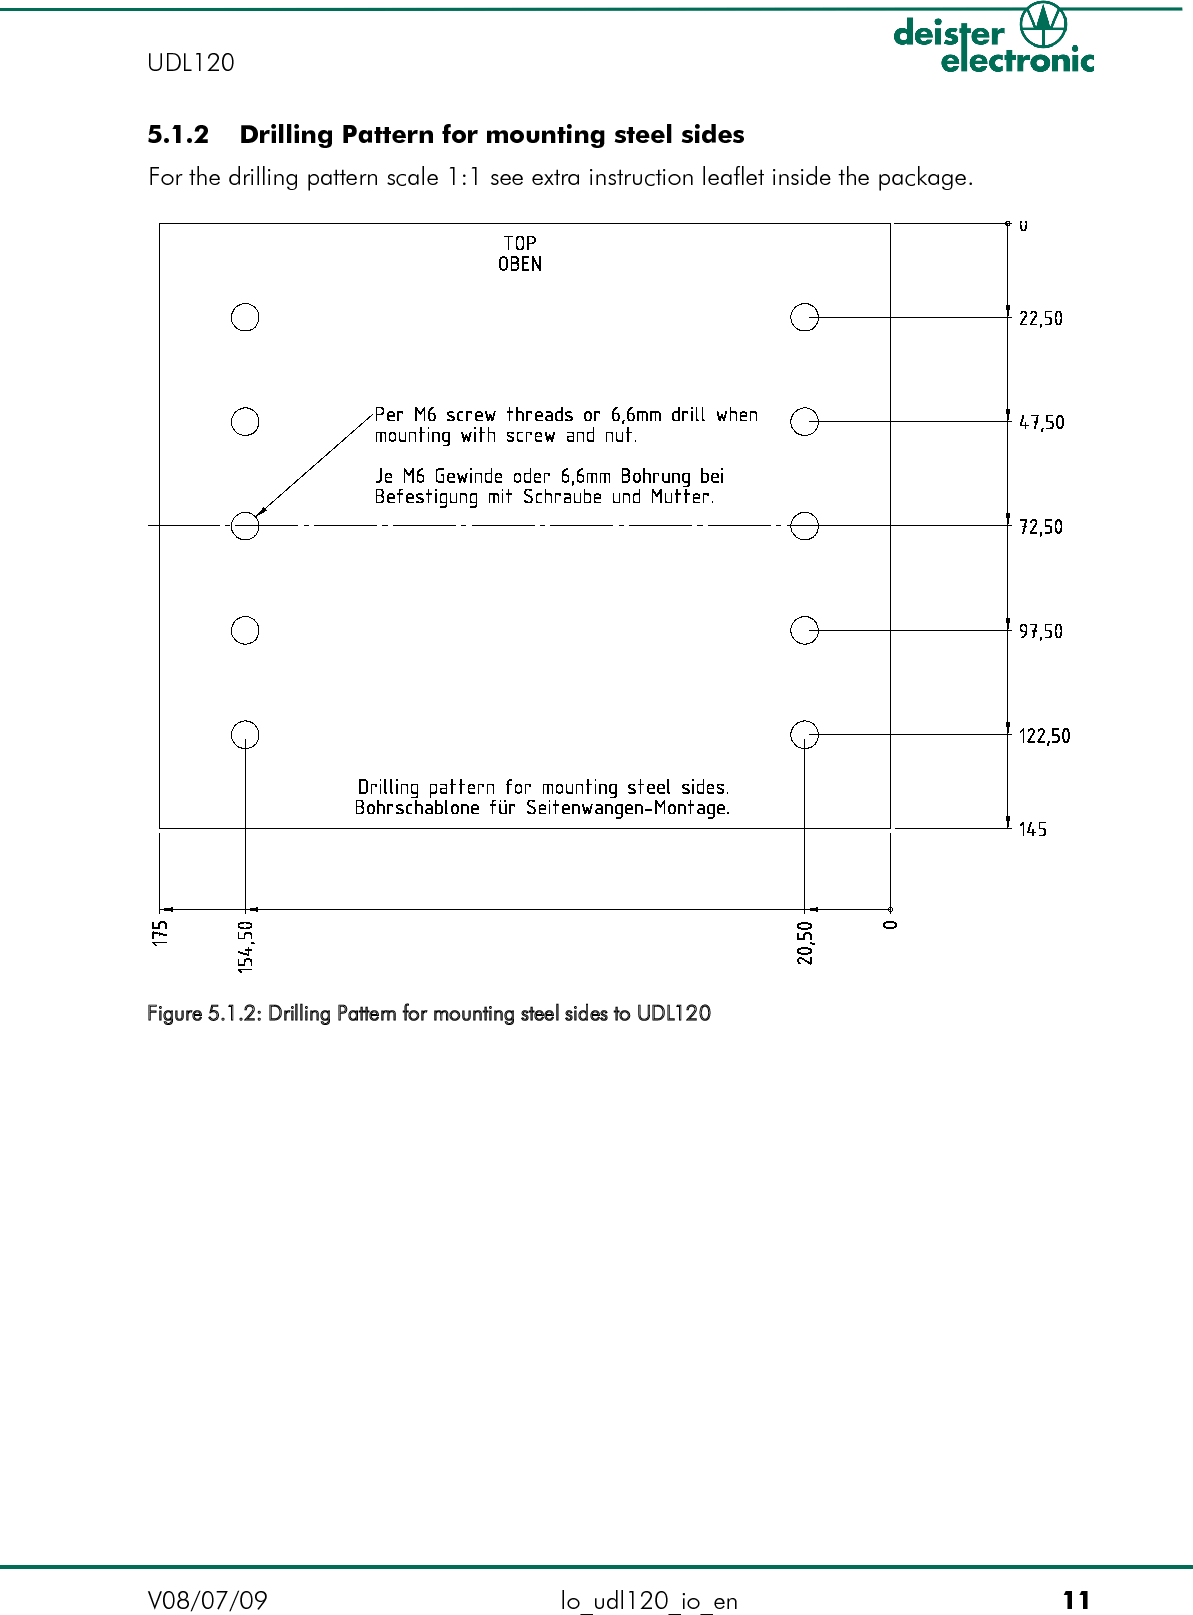  5.1.2  Drilling Pattern for mounting steel sidesFor the drilling pattern scale 1:1 see extra instruction leaflet inside the package.V08/07/09 lo_udl120_io_en 11UDL120 Figure 5.1.2: Drilling Pattern for mounting steel sides to UDL120